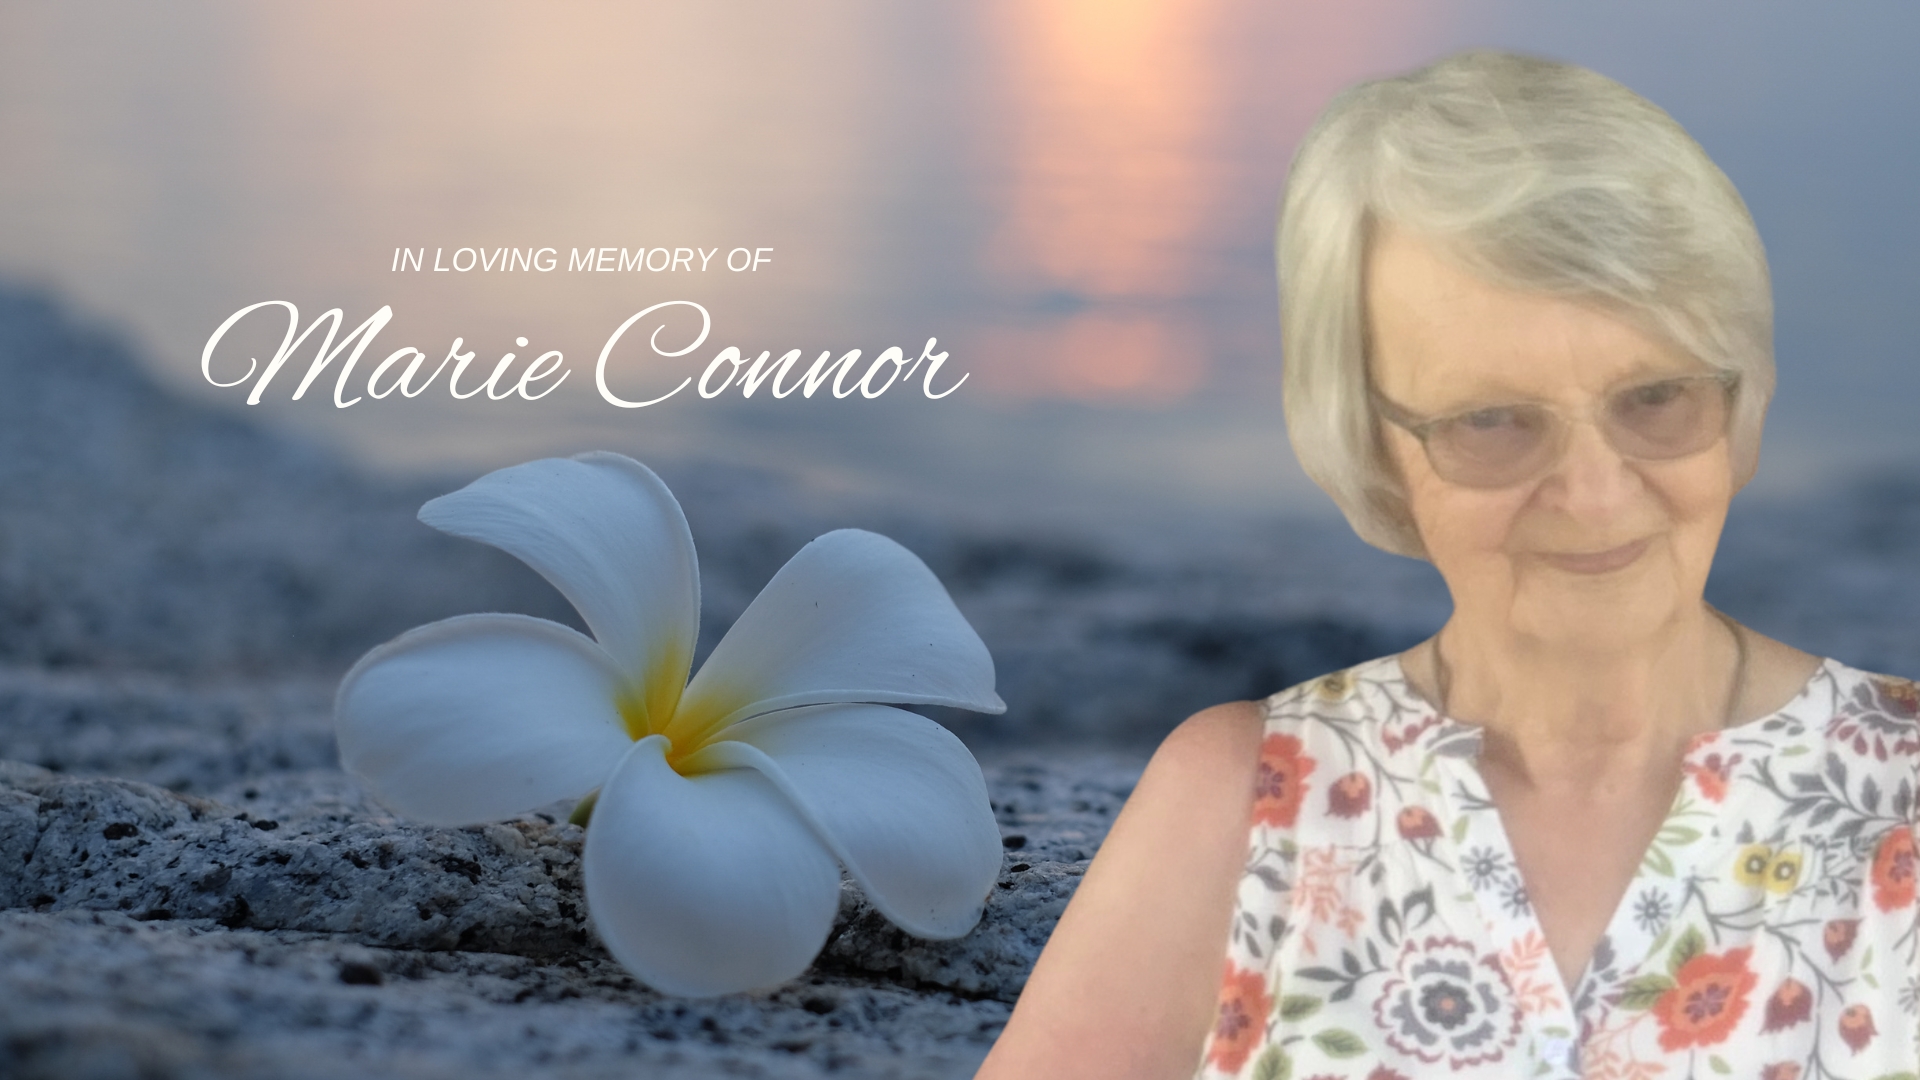 Marie Connor